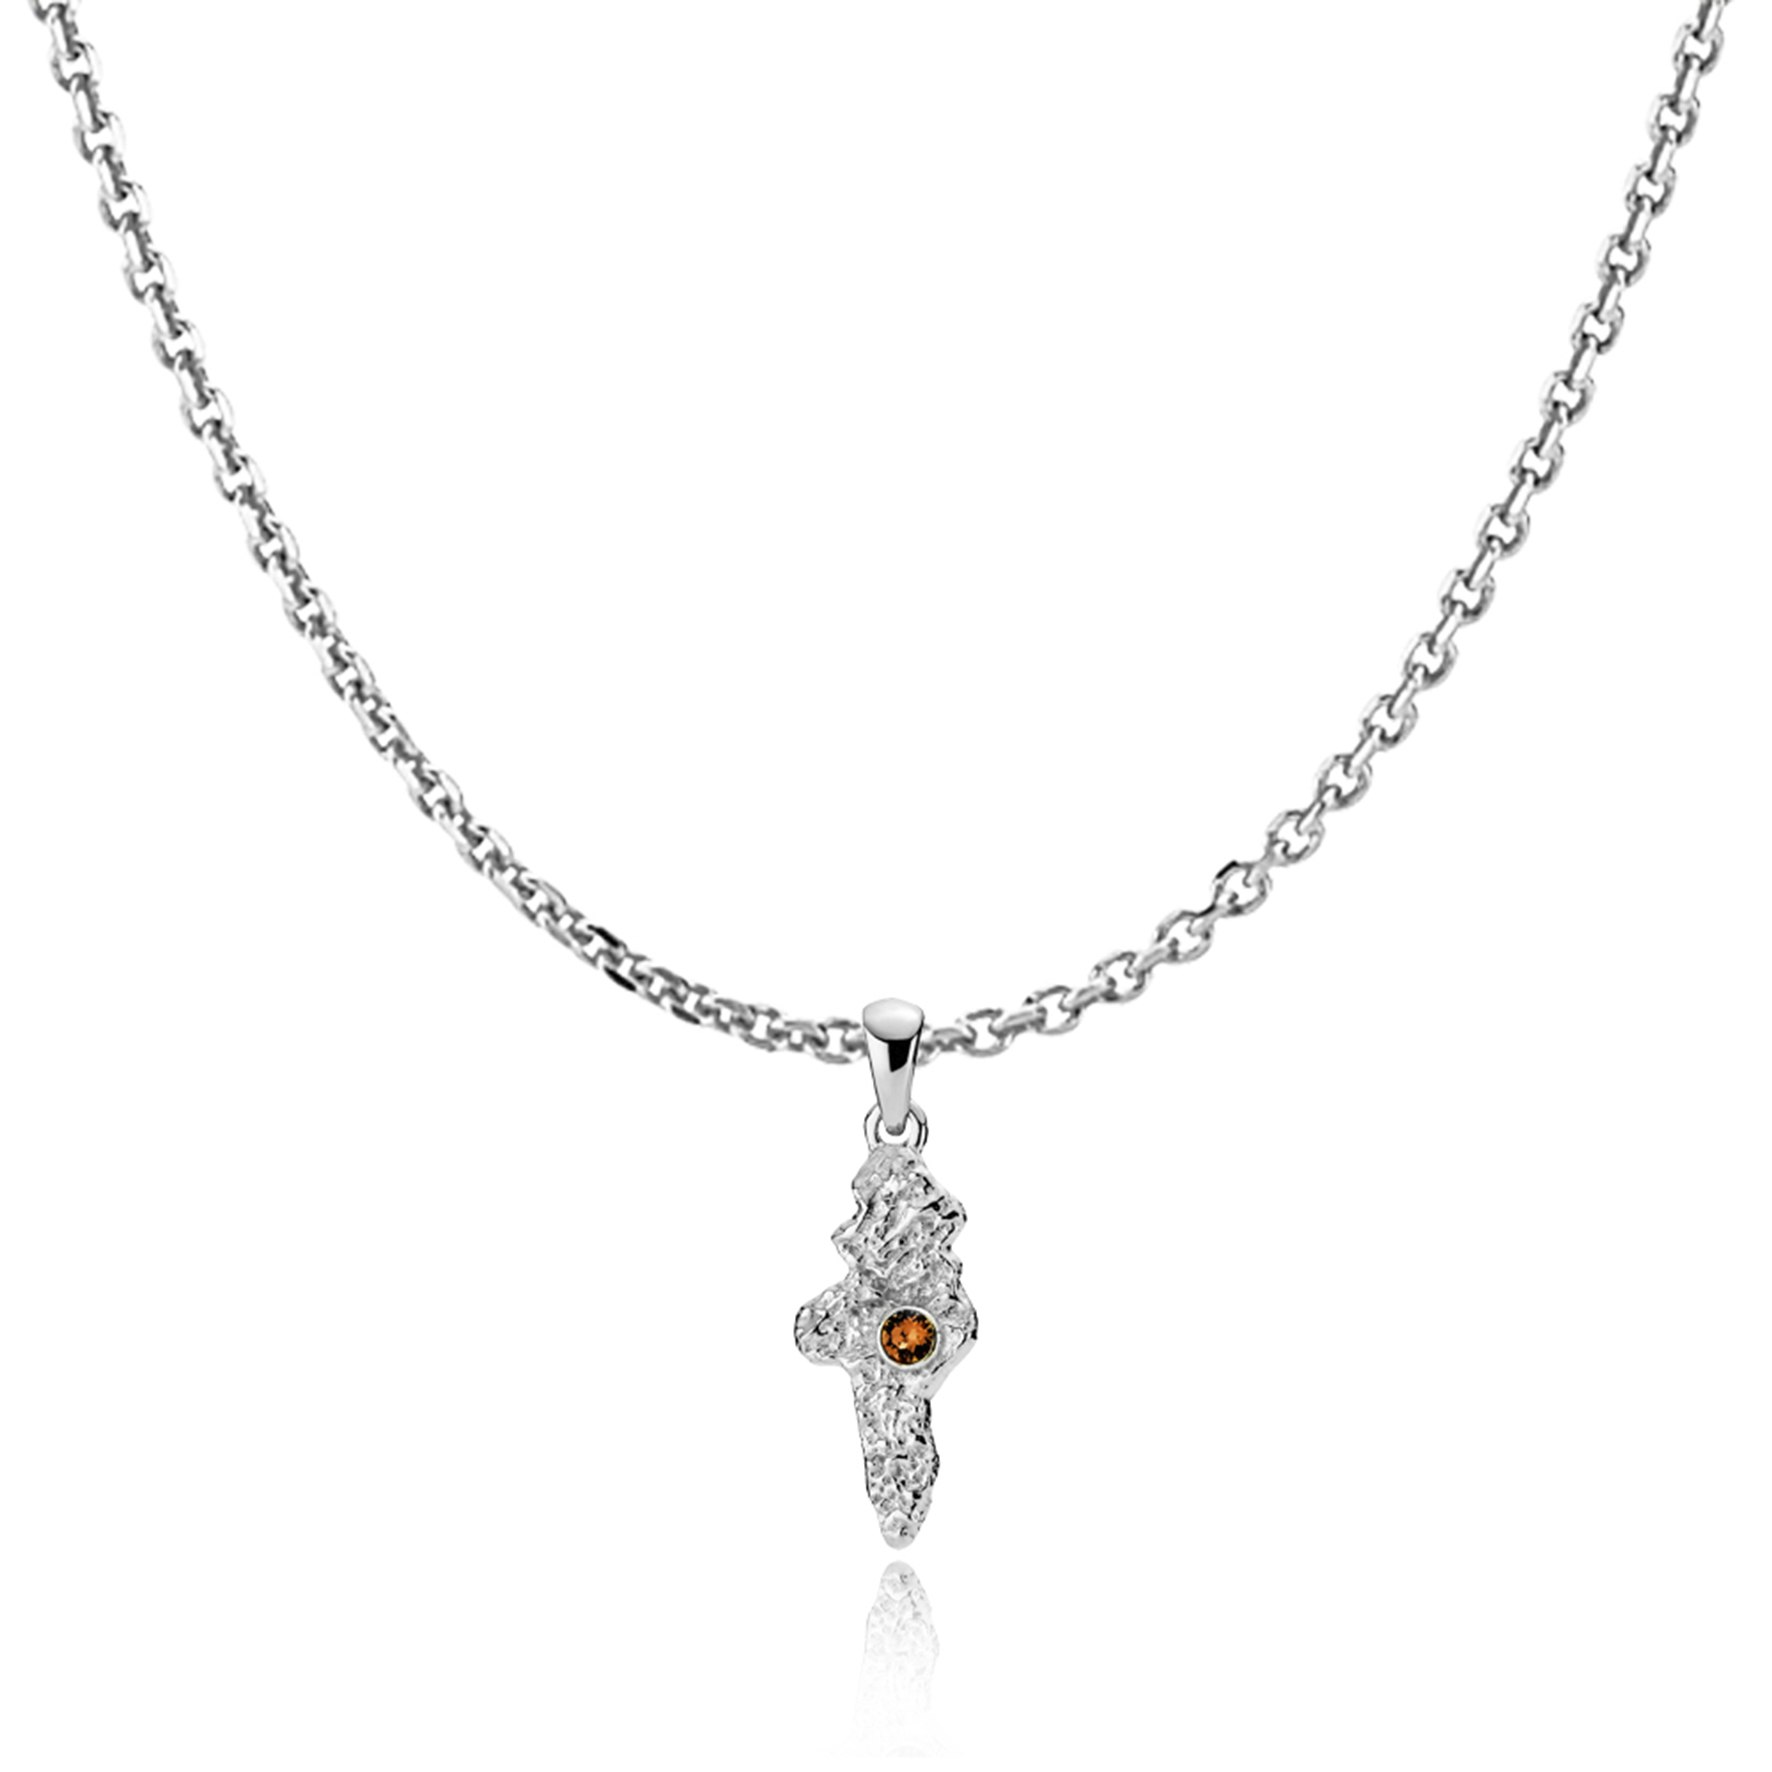 Silke By Sistie Pendant Necklace from Sistie in Silver Sterling 925